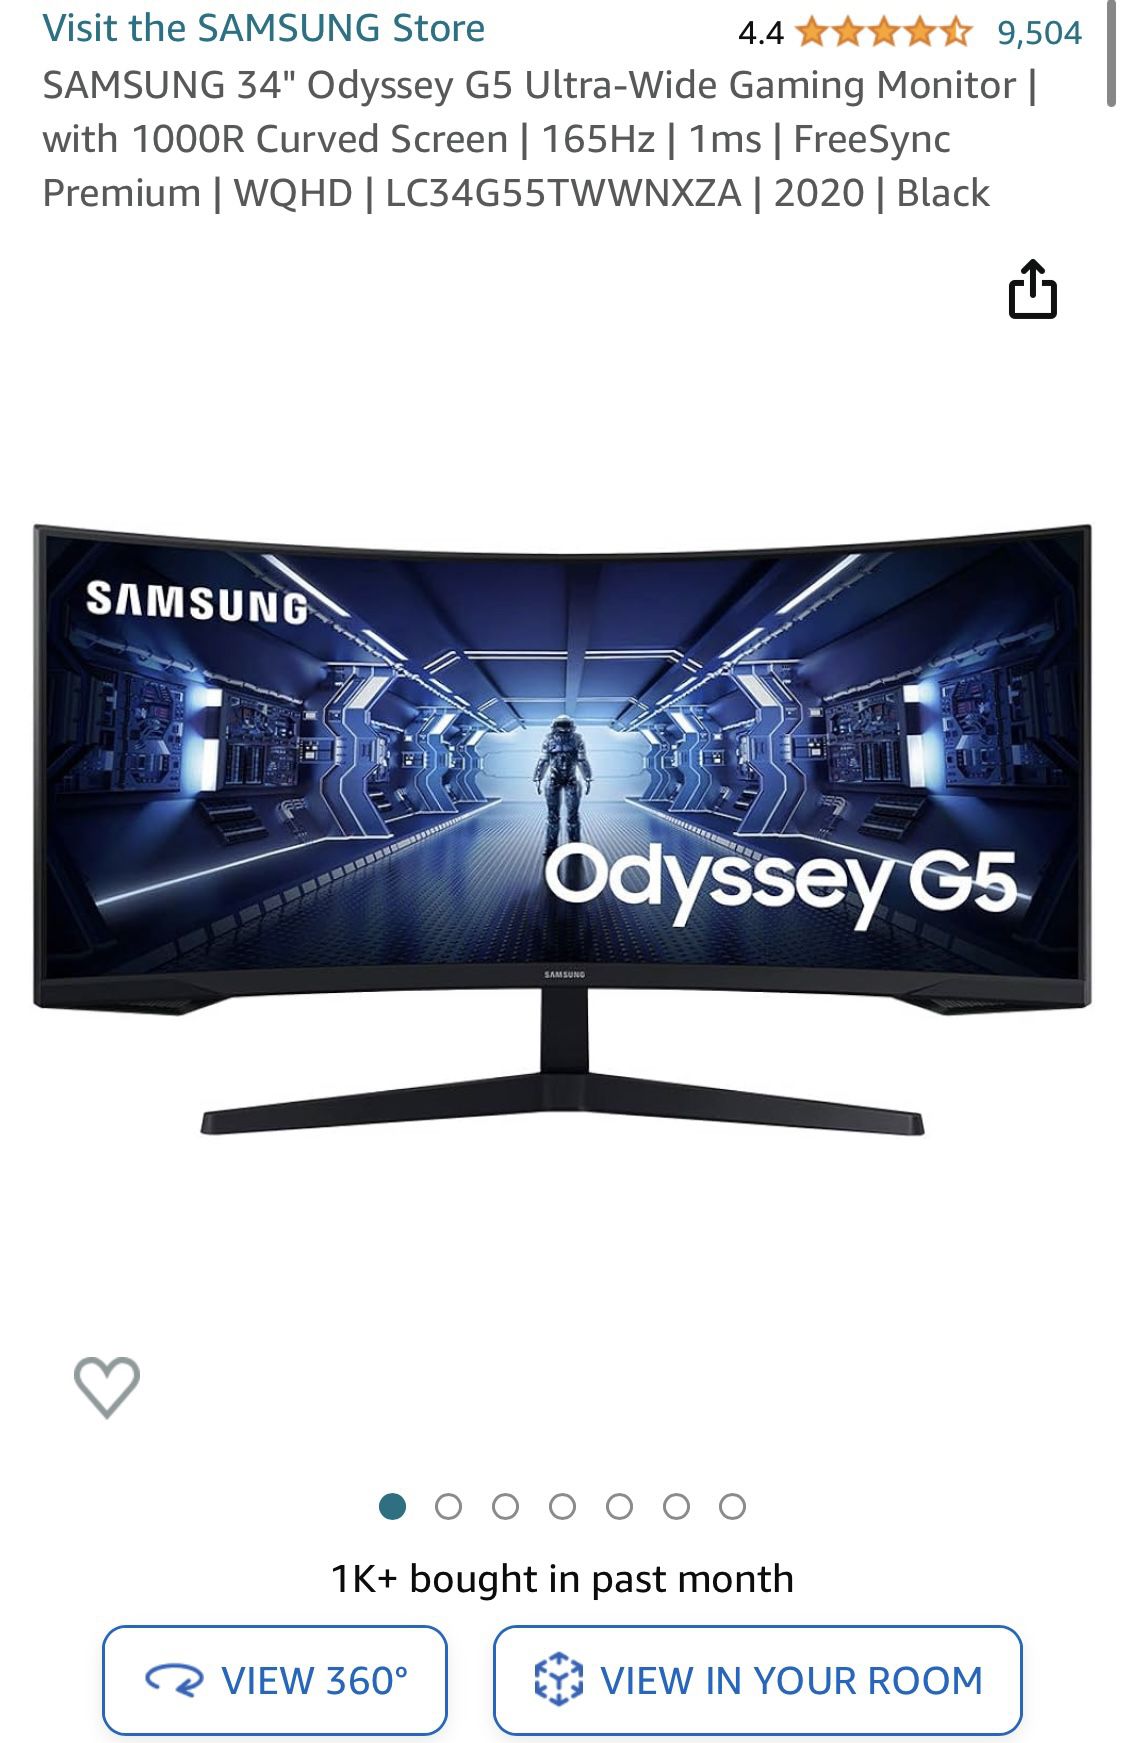 SAMSUNG 34" Odyssey G5 Ultra-Wide Gaming Monitor